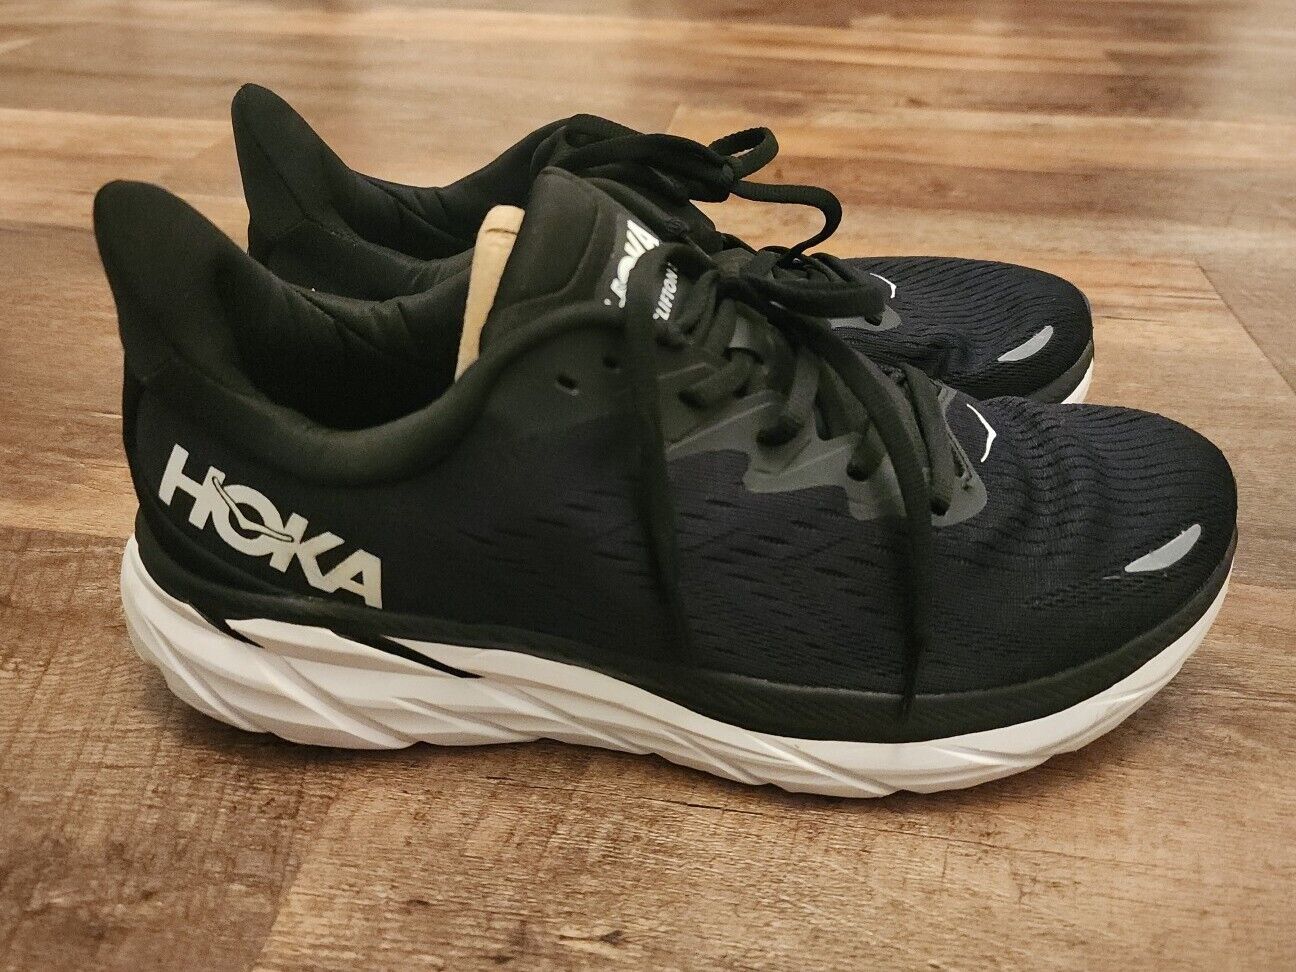 NEW Hoka One Clifton 8 Black White Men’s Running Shoes Size 11B UK9.5 Tried On